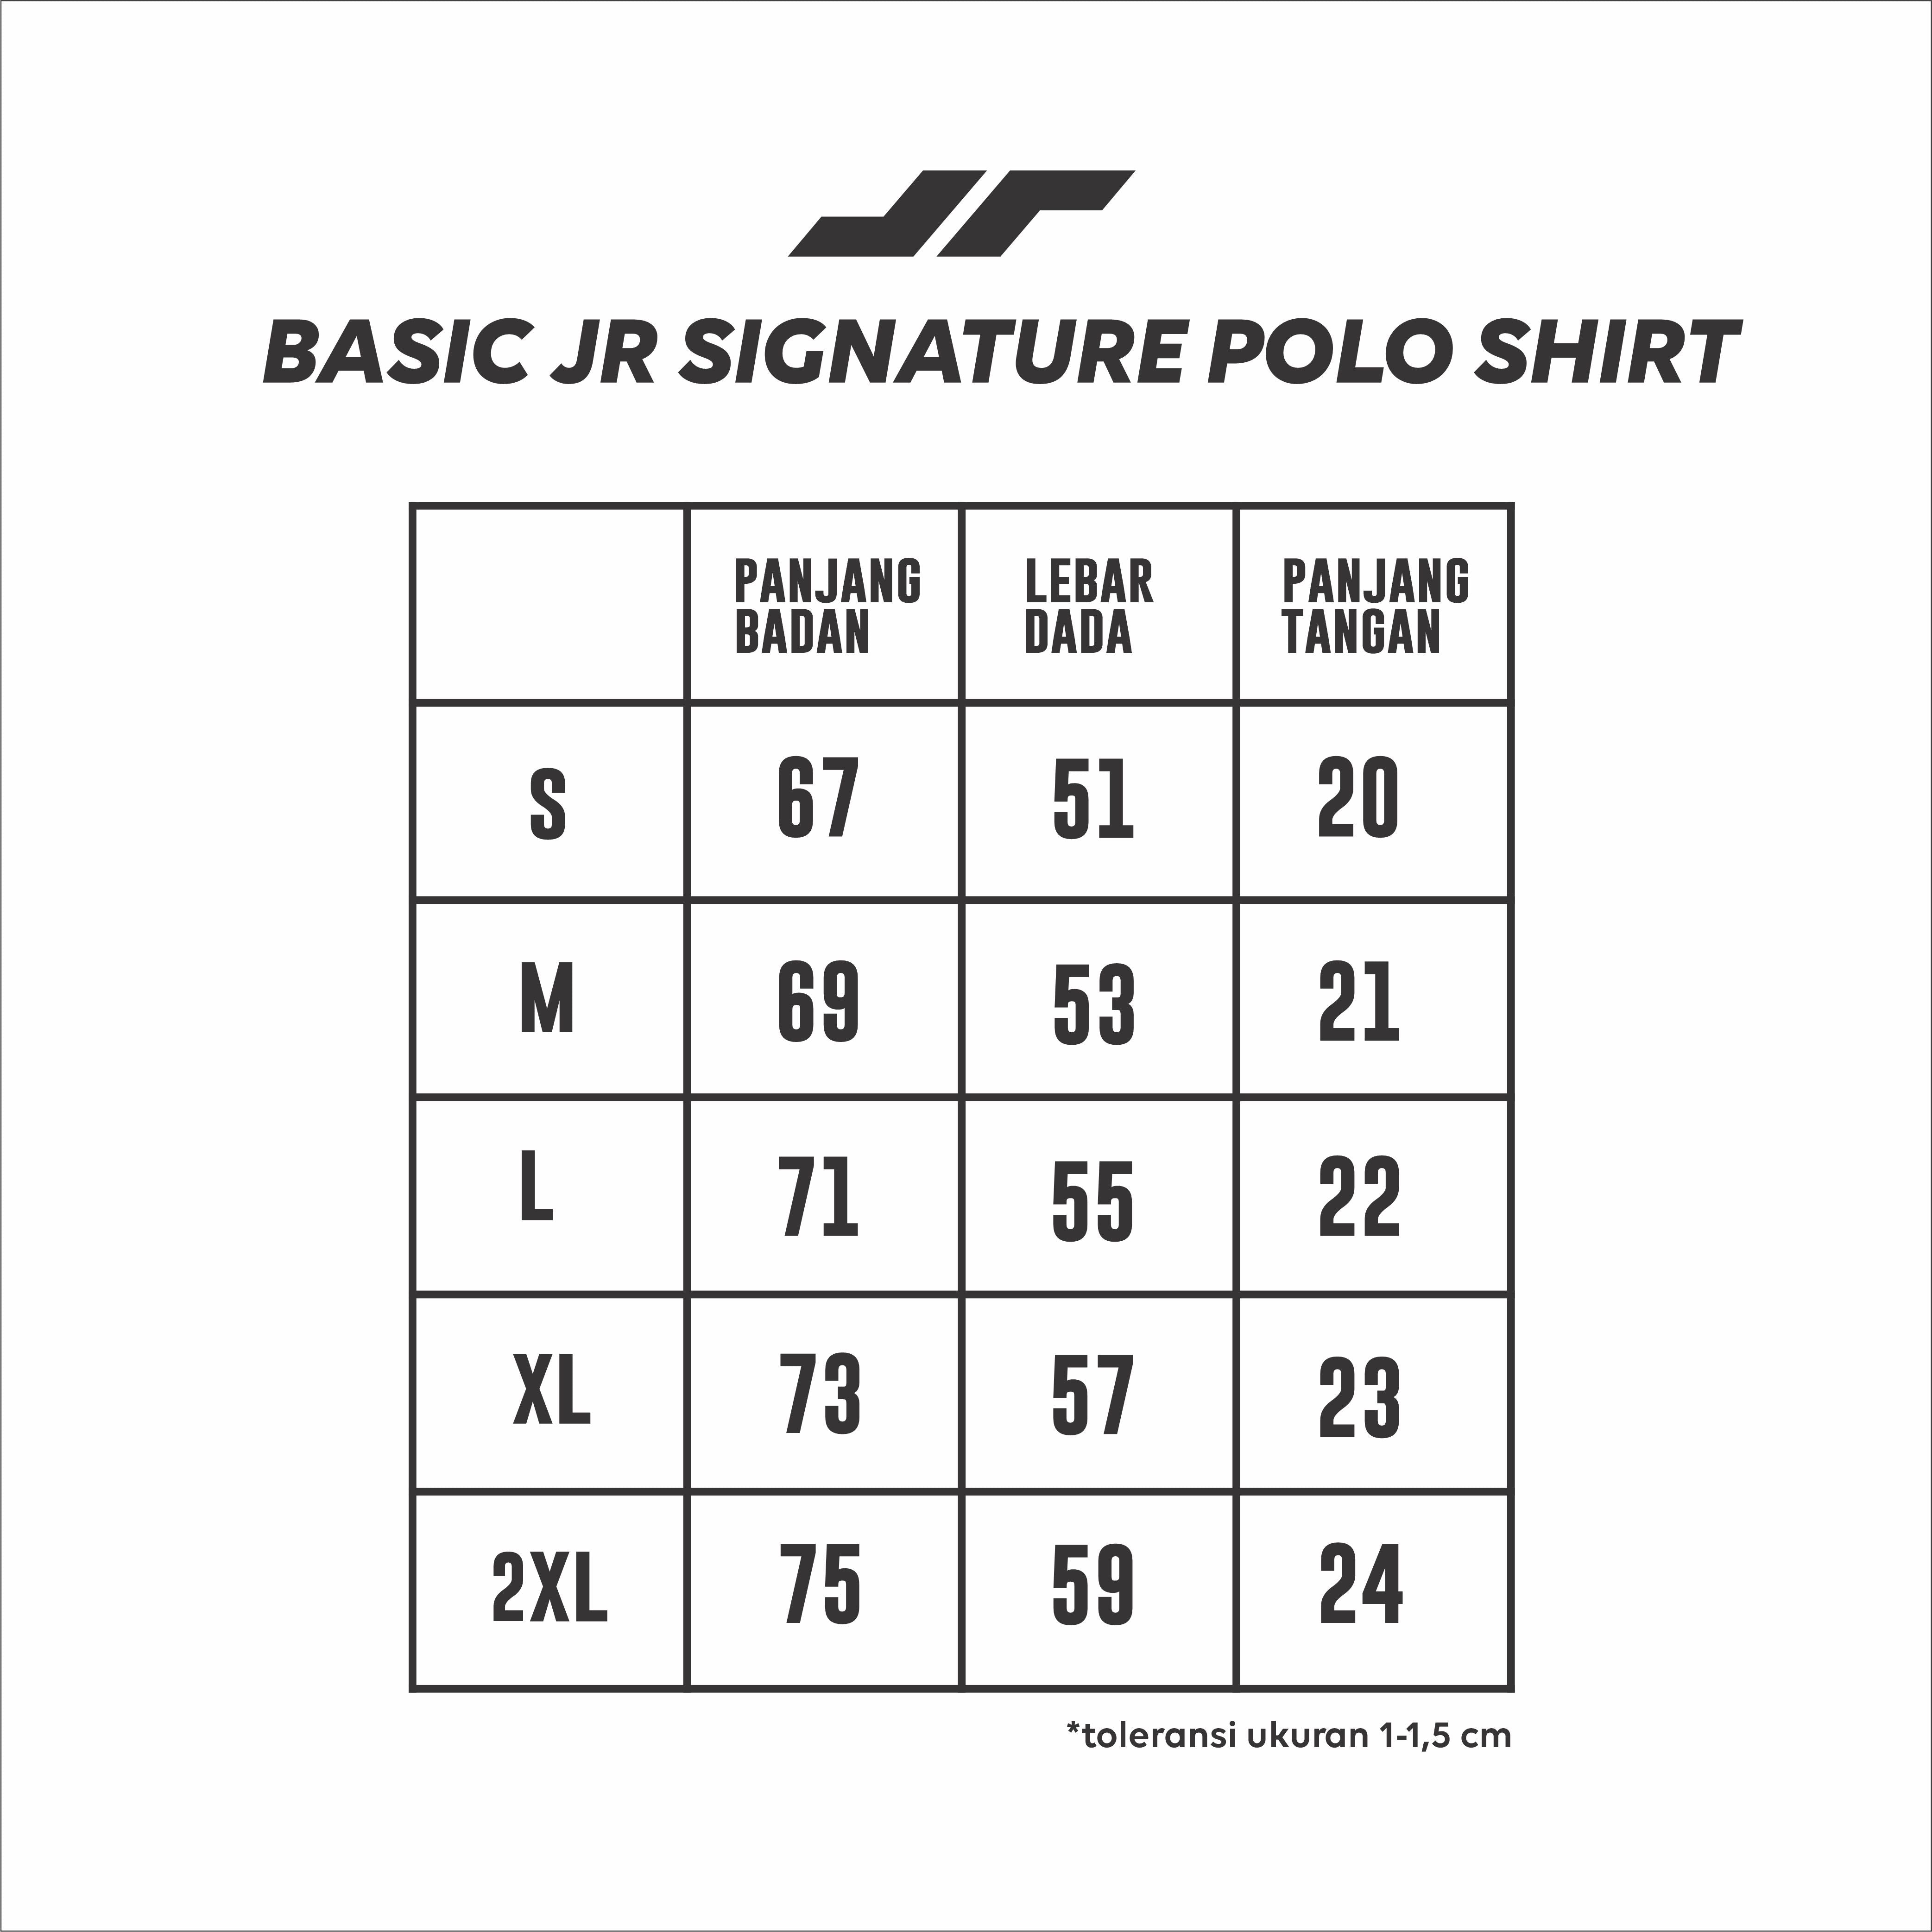 Juaraga Polo Shirt - Pria JR Signature  - Abu